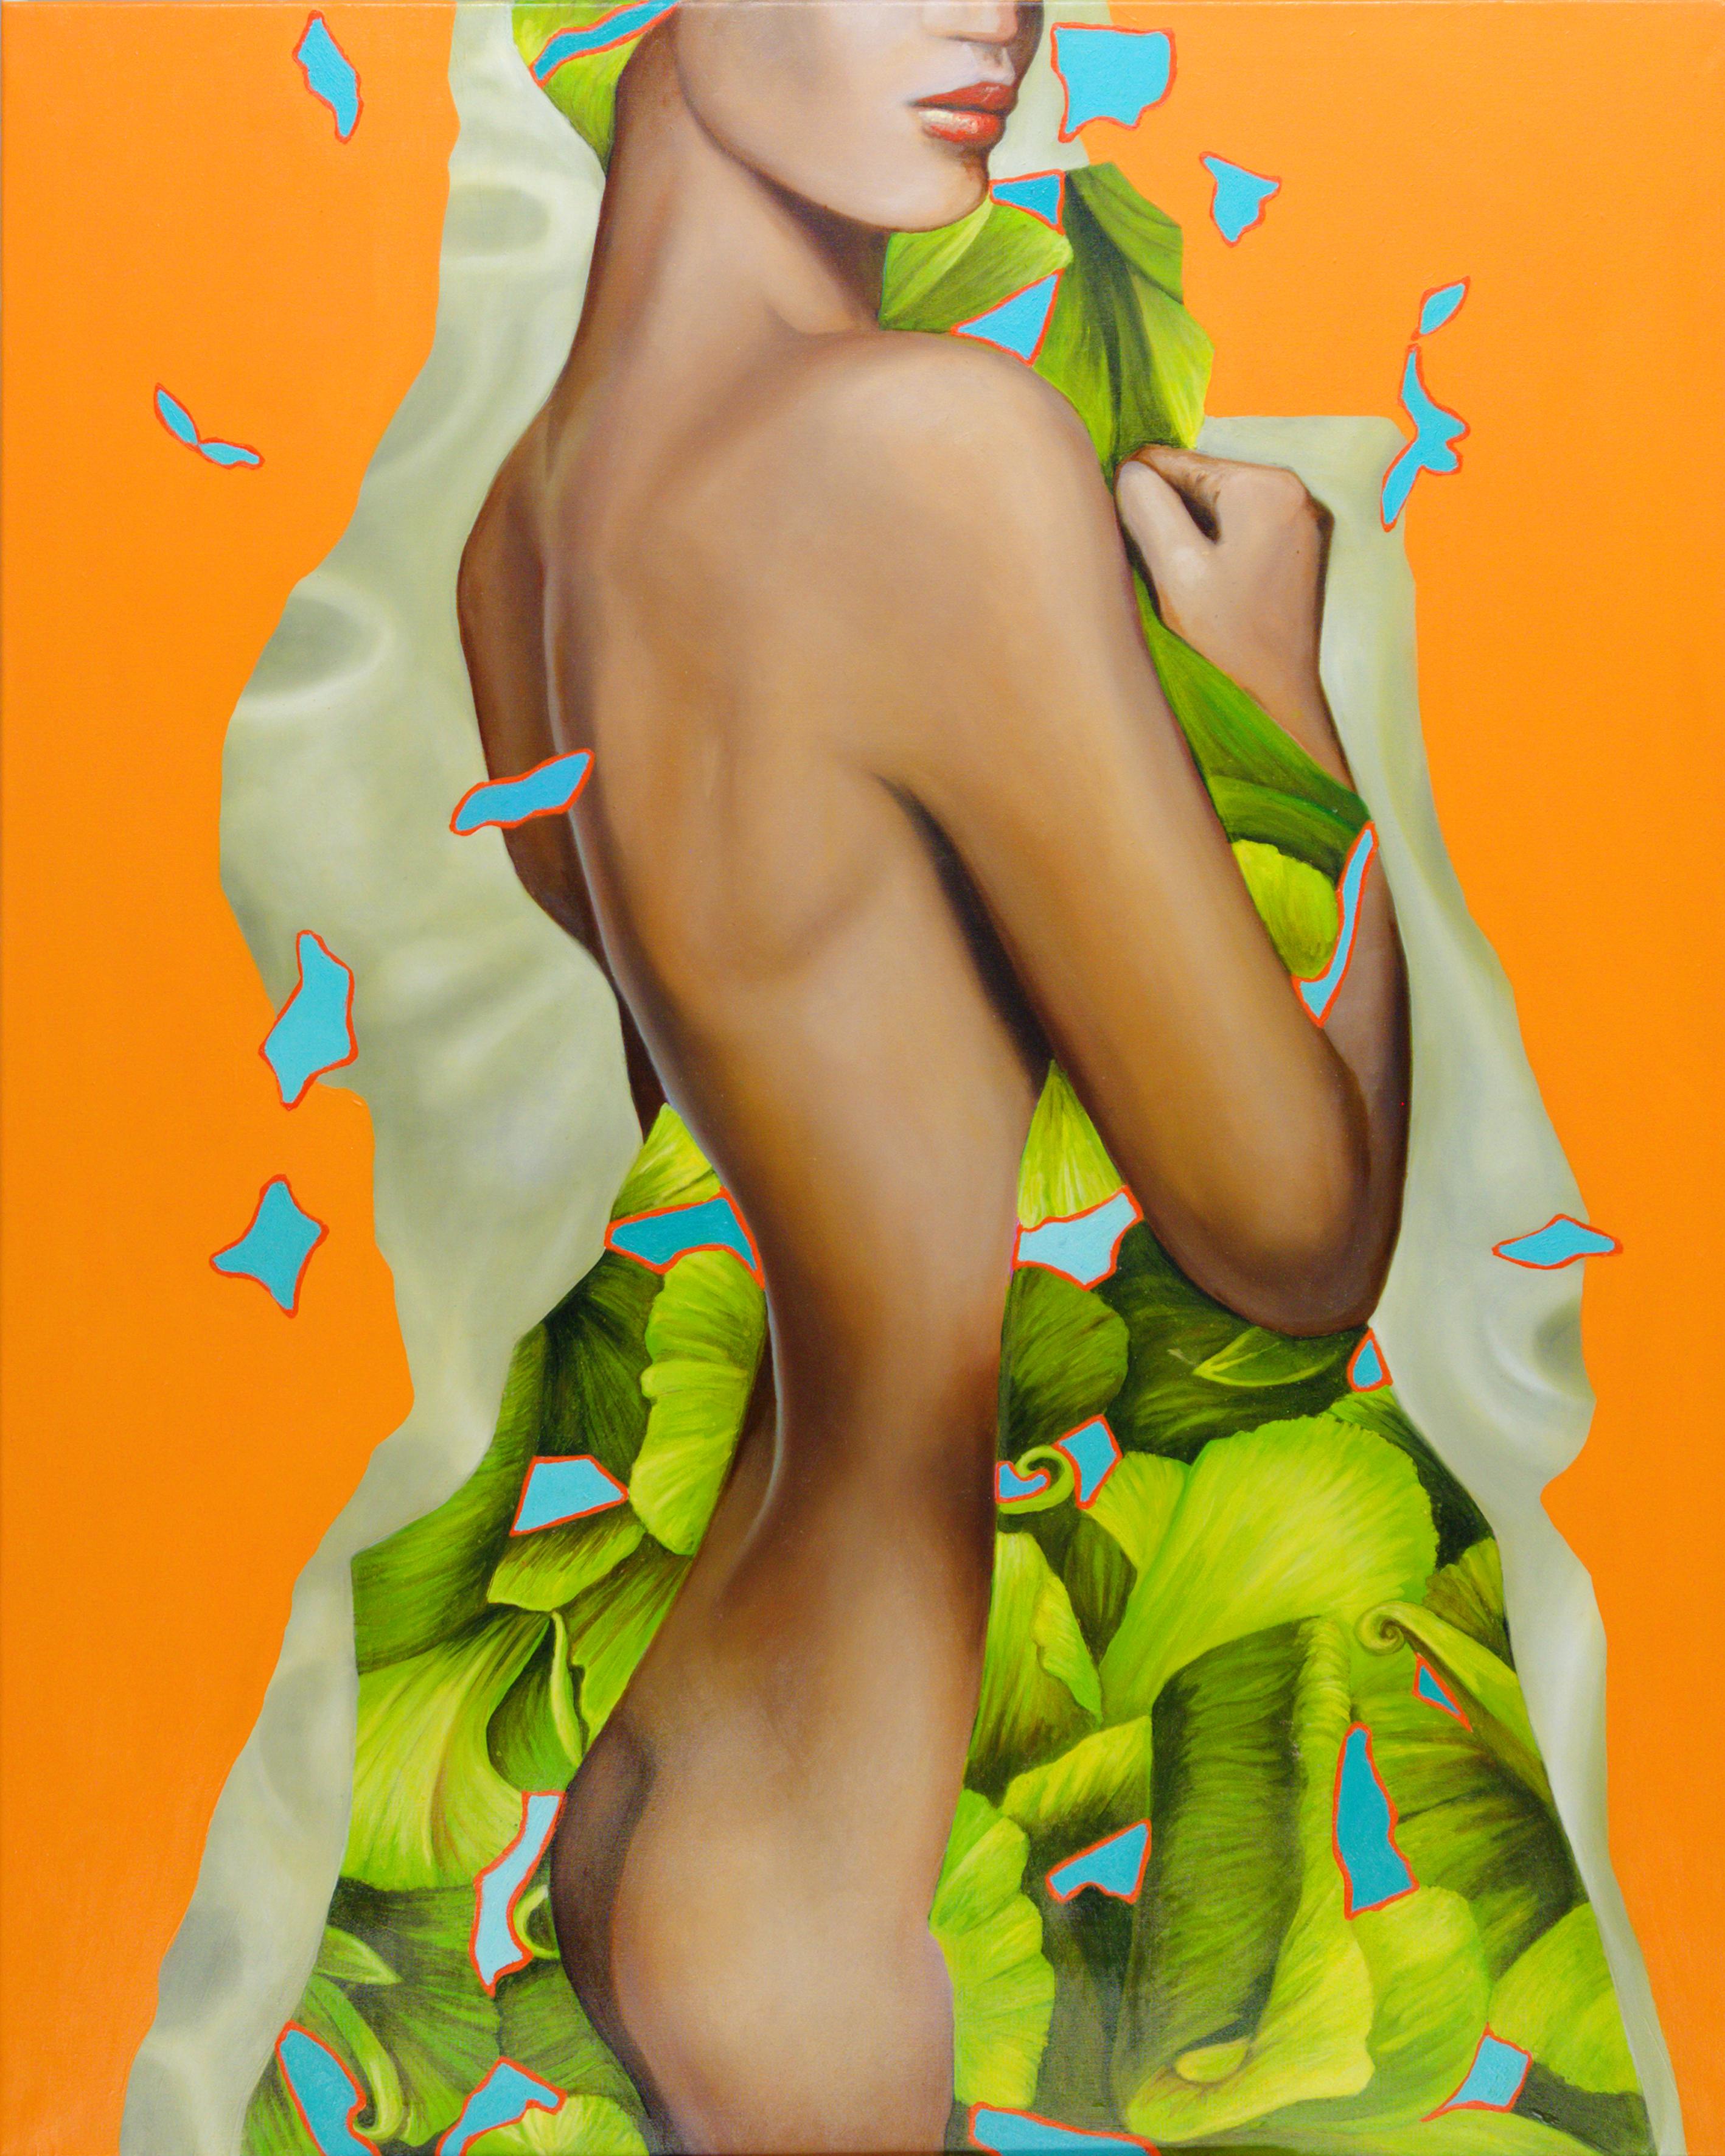 Manzur Kargar Portrait Painting - Leaves - Contemporary, Pop Art, 21th C, Figurative Art, modern, female Portrait